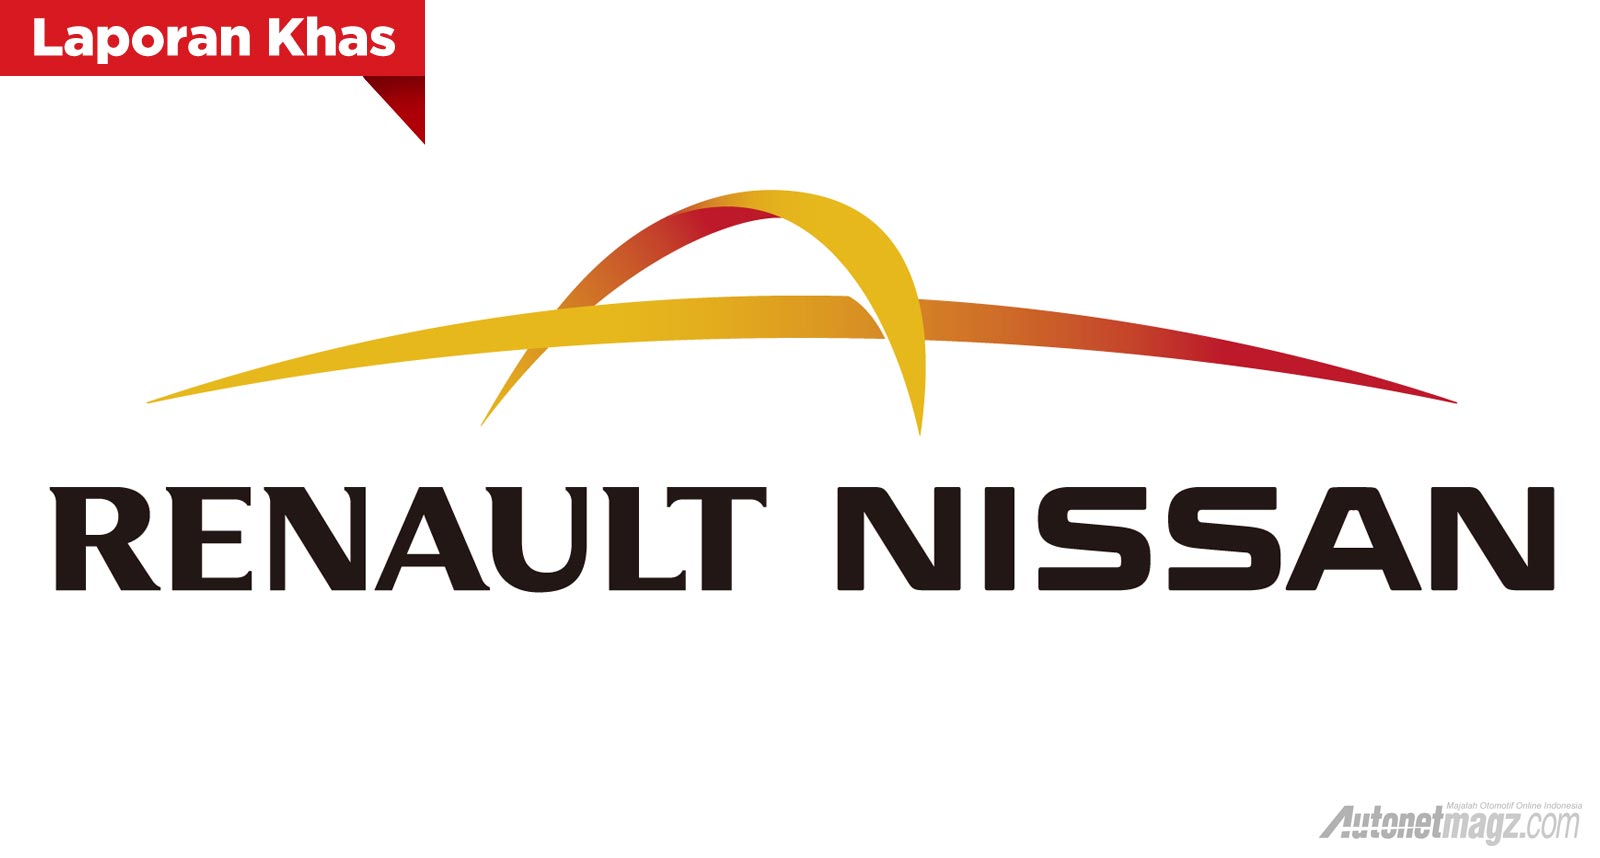 Renault nissan logo vector #1